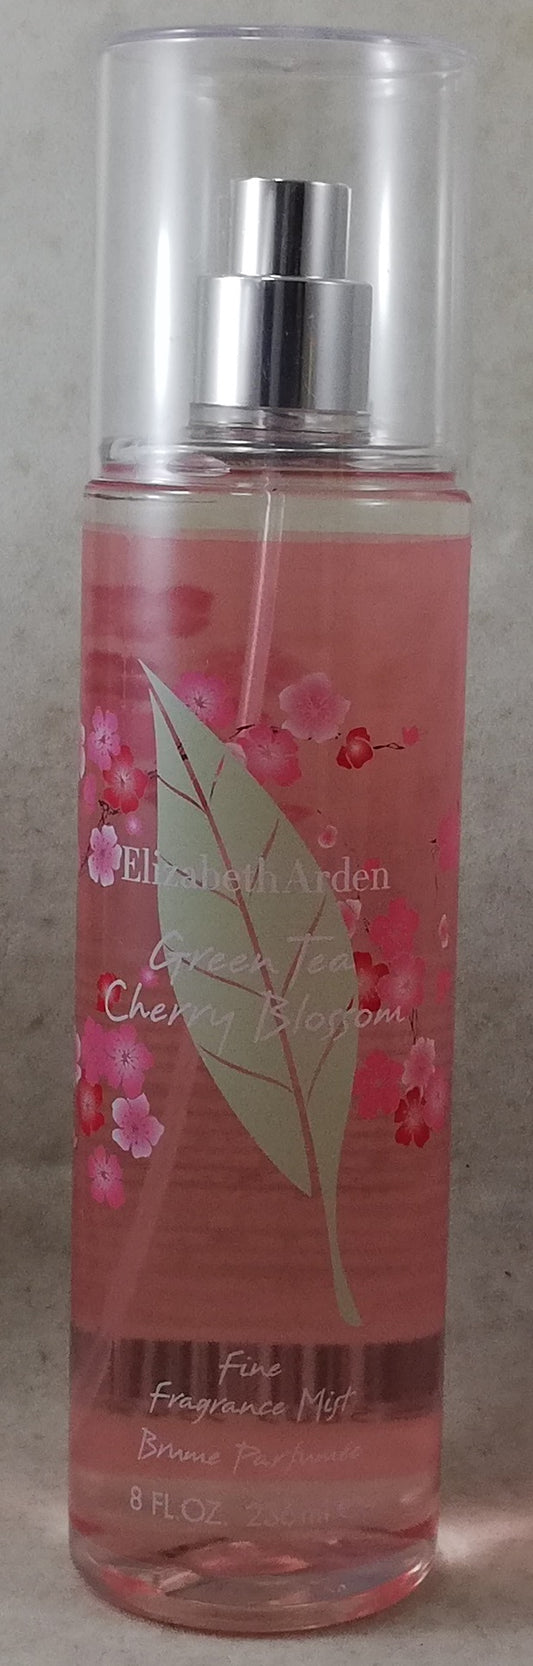 Elizabeth Arden Green Tea Cherry Blossom Fragrance Mist, 236ml